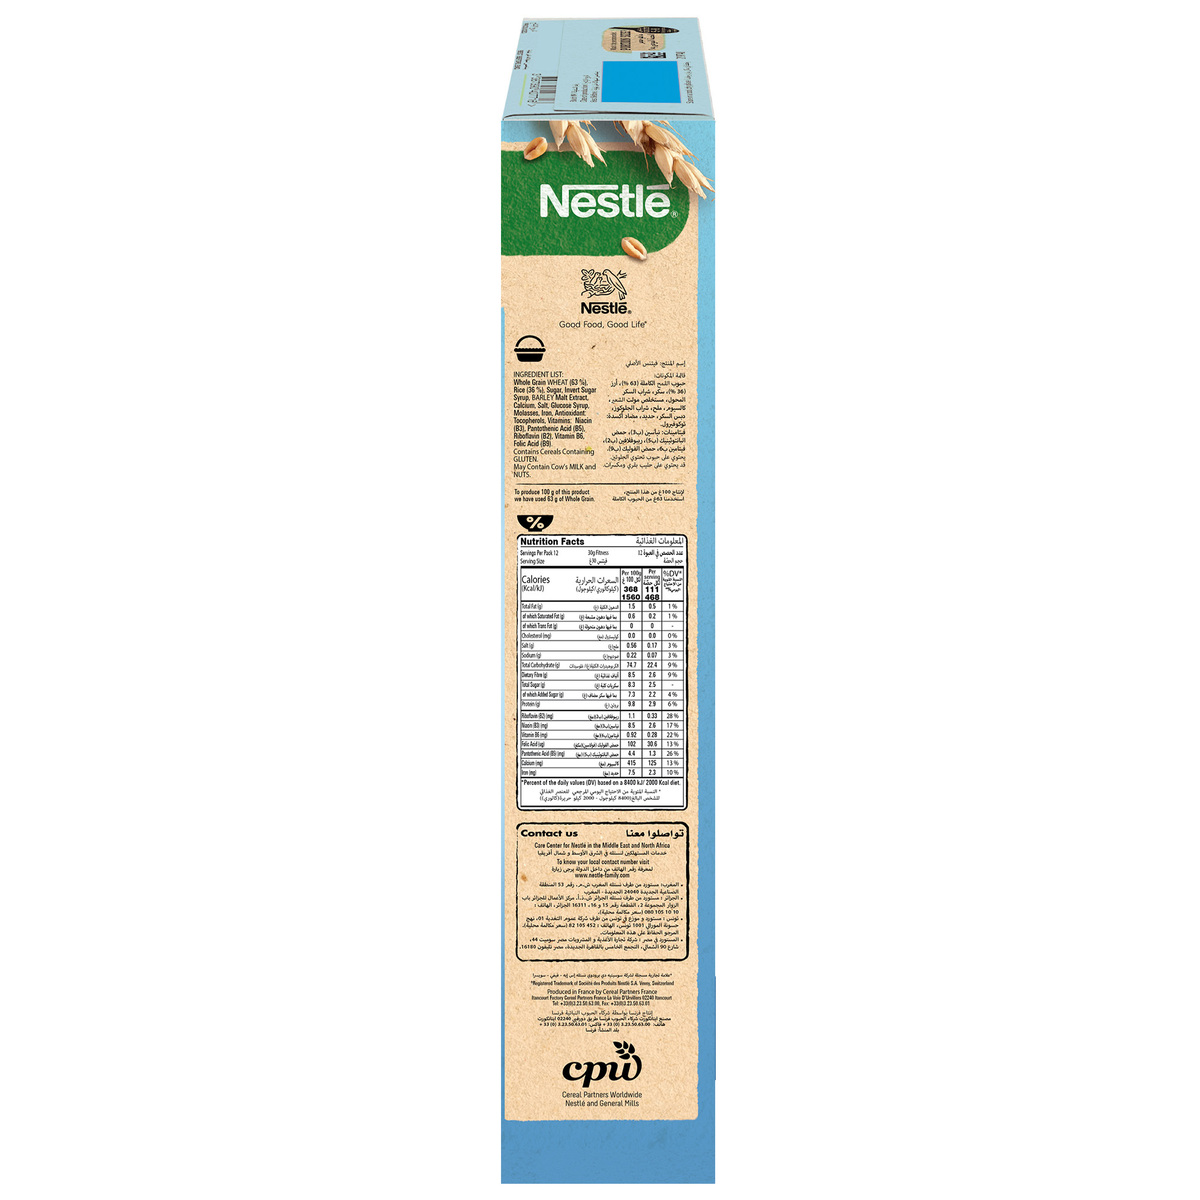 Nestle Fitness Original Breakfast Cereal 375 g